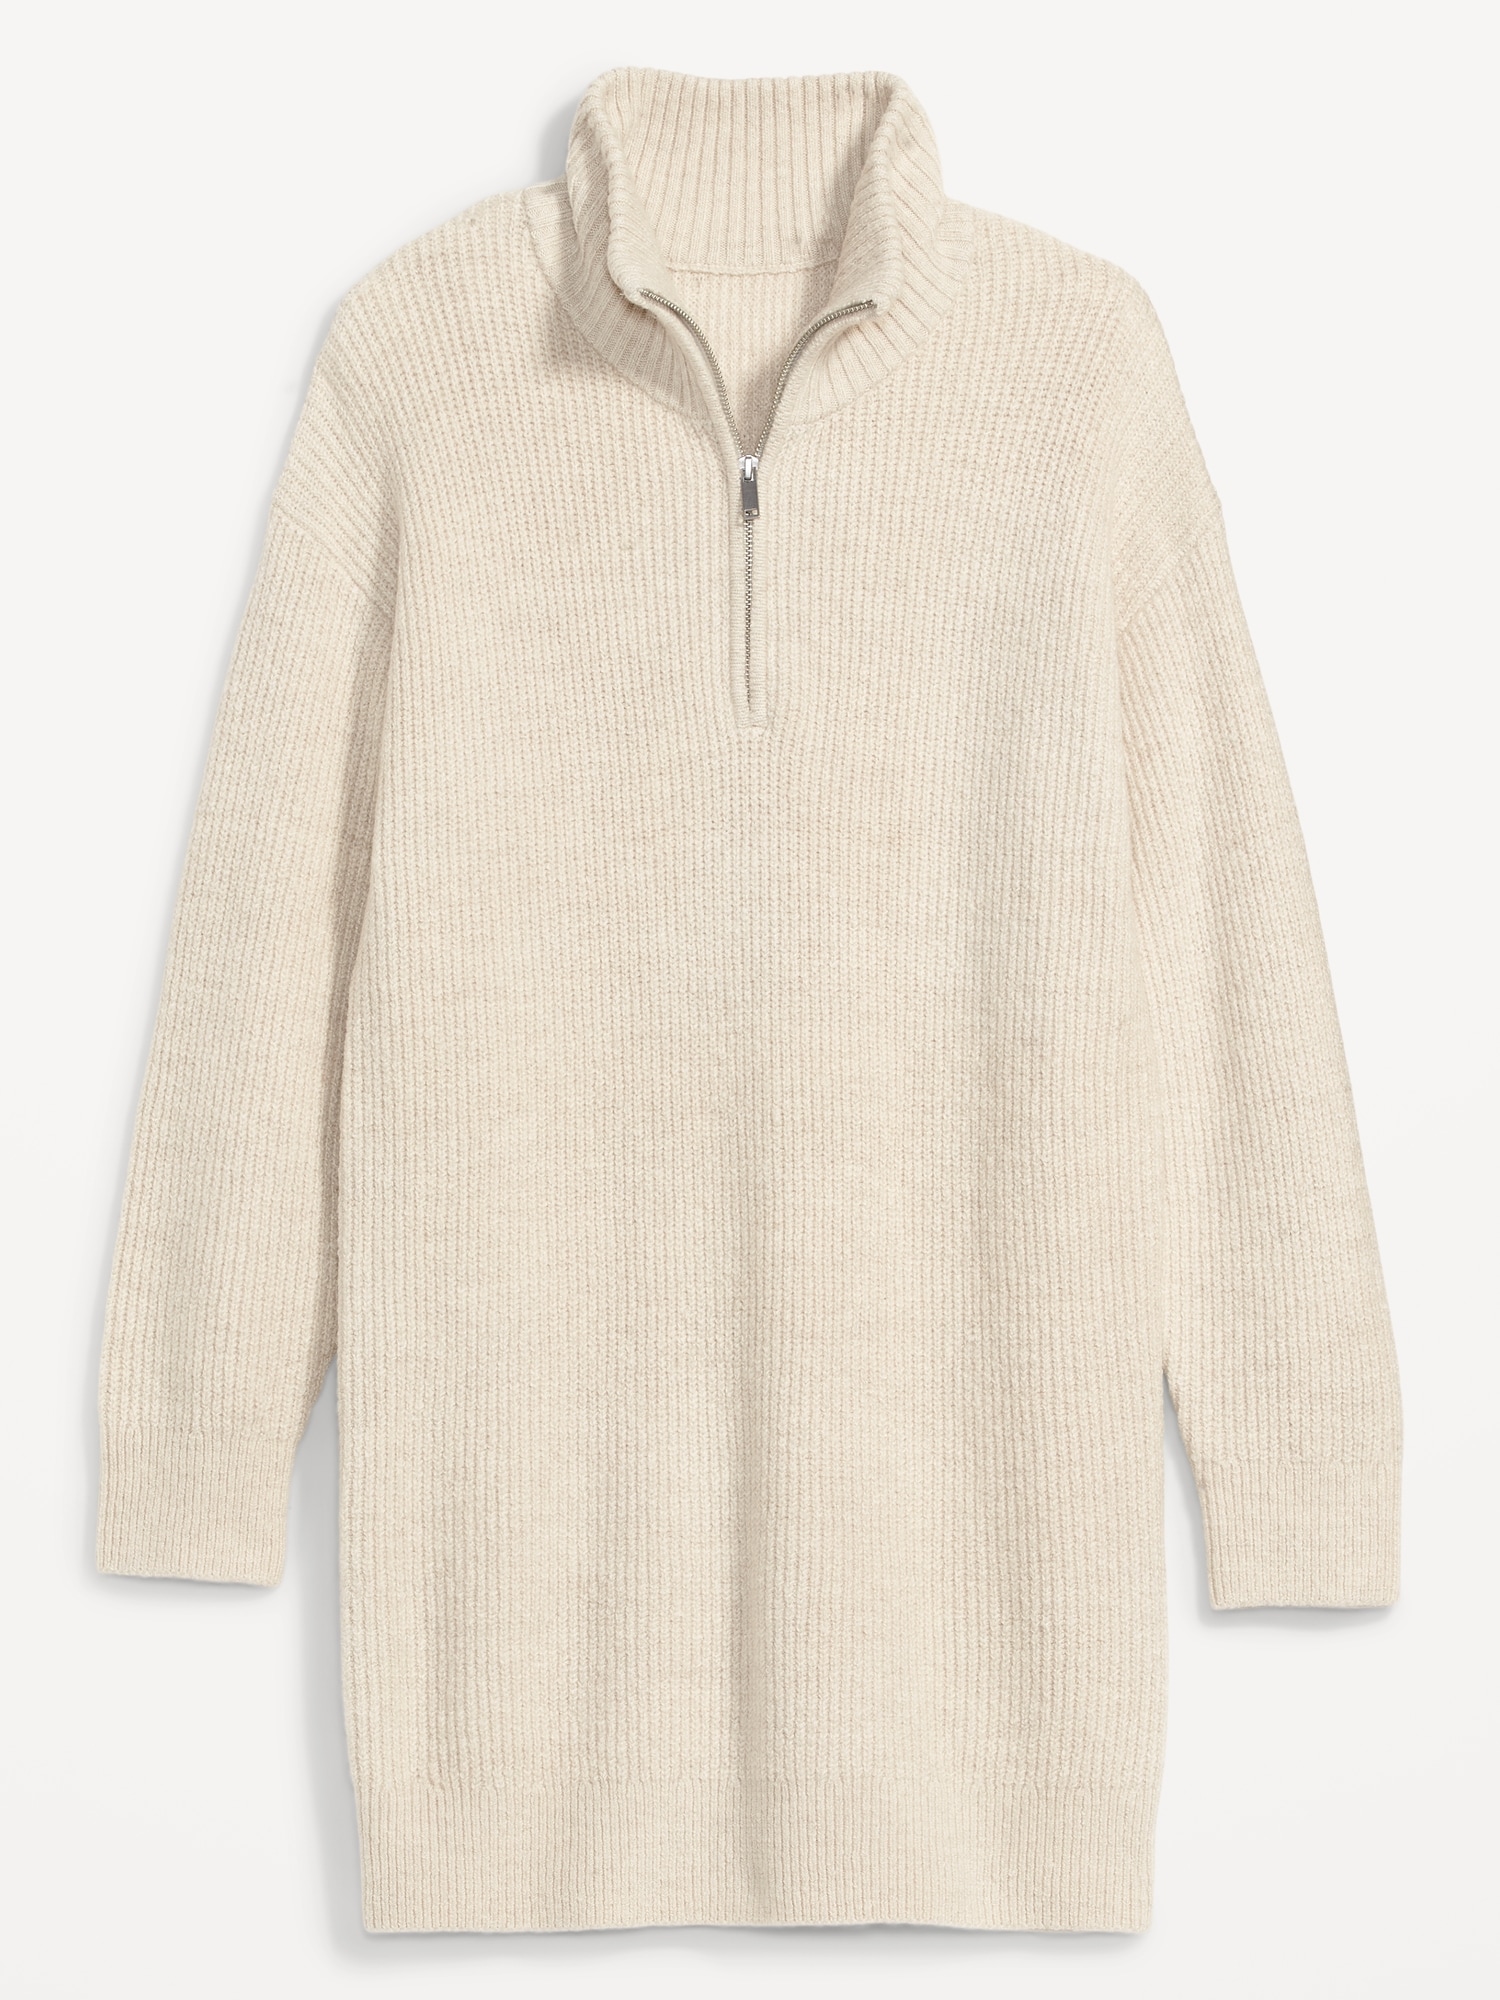 Mock-Neck Quarter-Zip Mini Sweater Shift Dress for Women